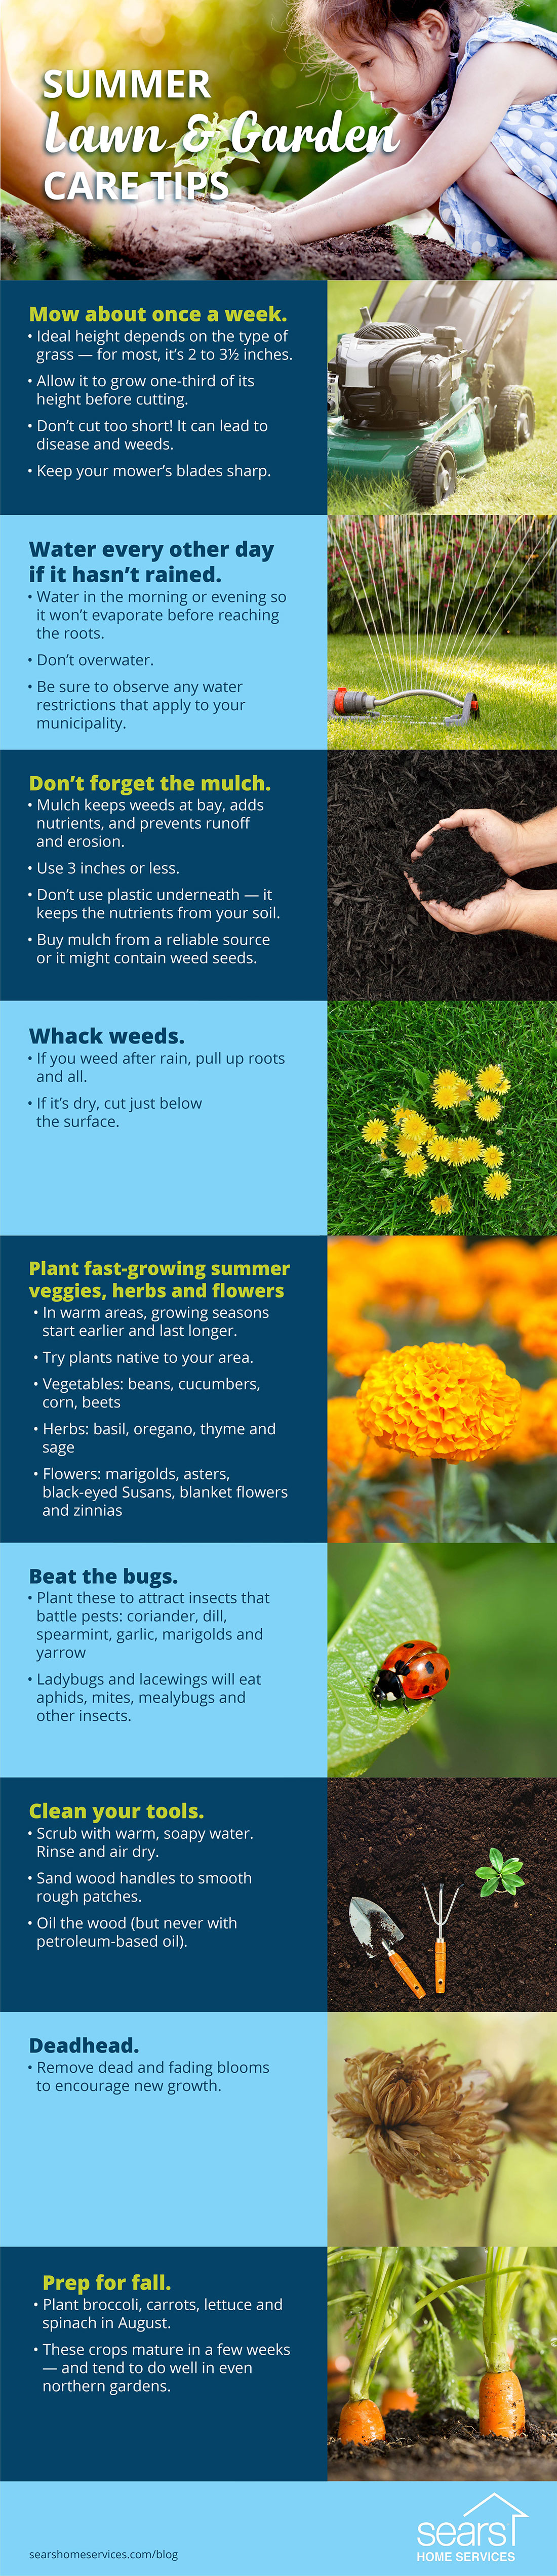 Garden Care: 9 Tips for Summer Lawn and Garden Care